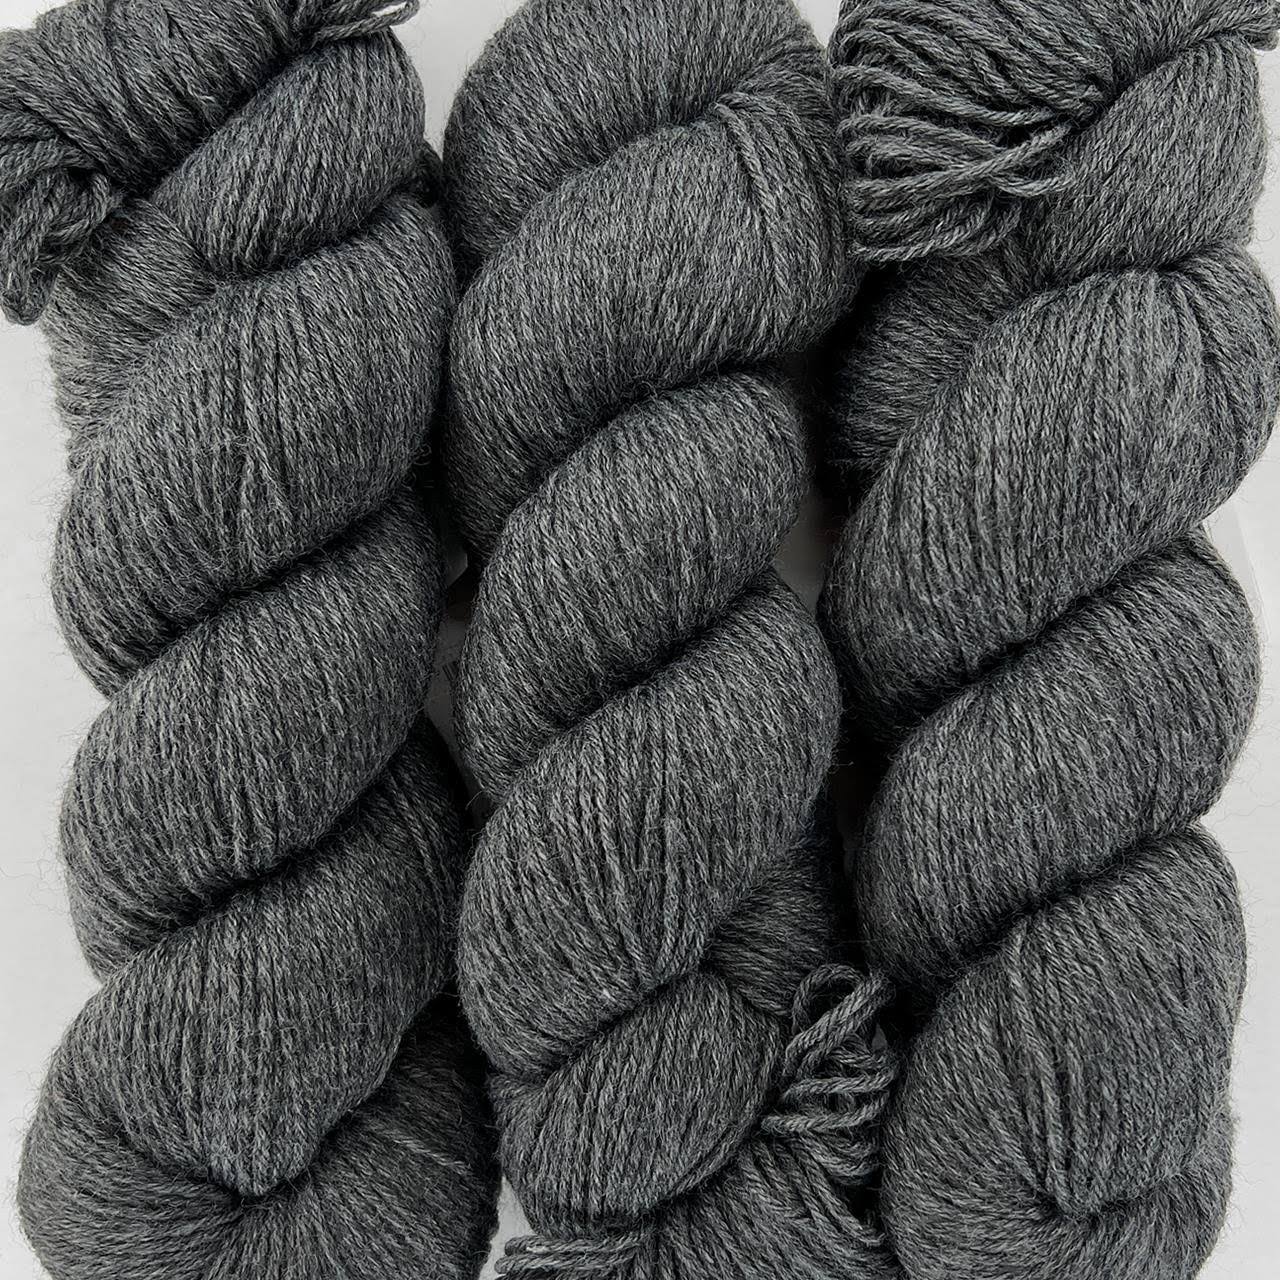 Cascade Yarns Heritage 6 - Charcoal (5631) 100g (3.5oz) 75% Merino Wool 25% Nylon